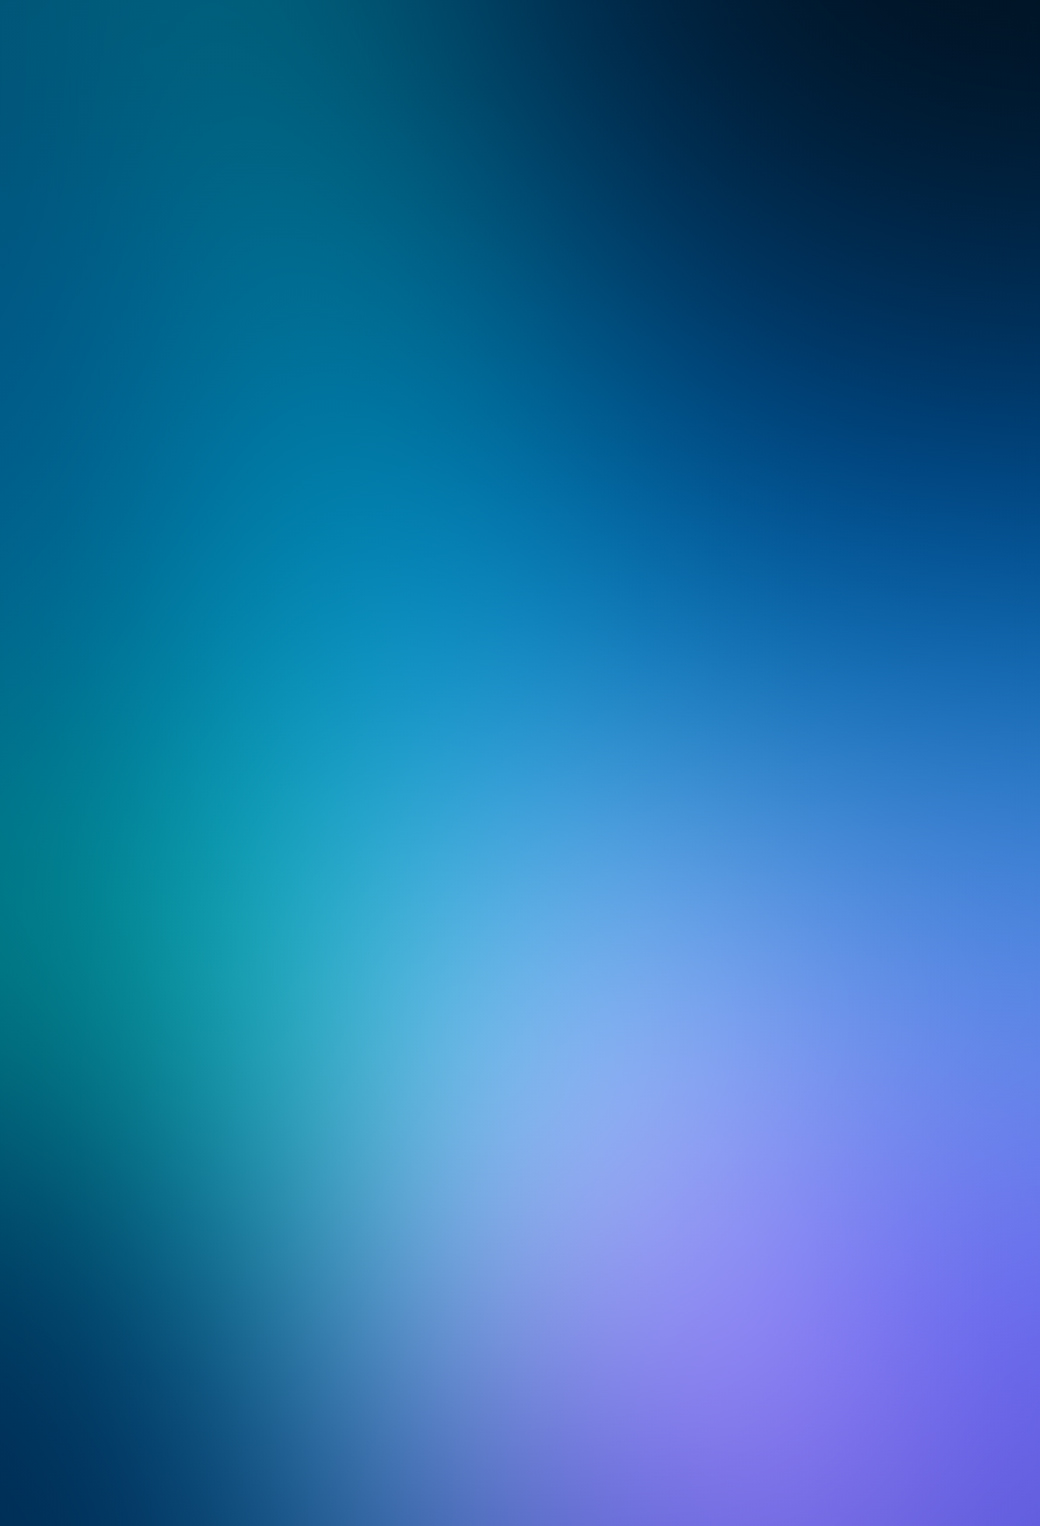 iphone parallax wallpaper,blue,sky,daytime,aqua,turquoise